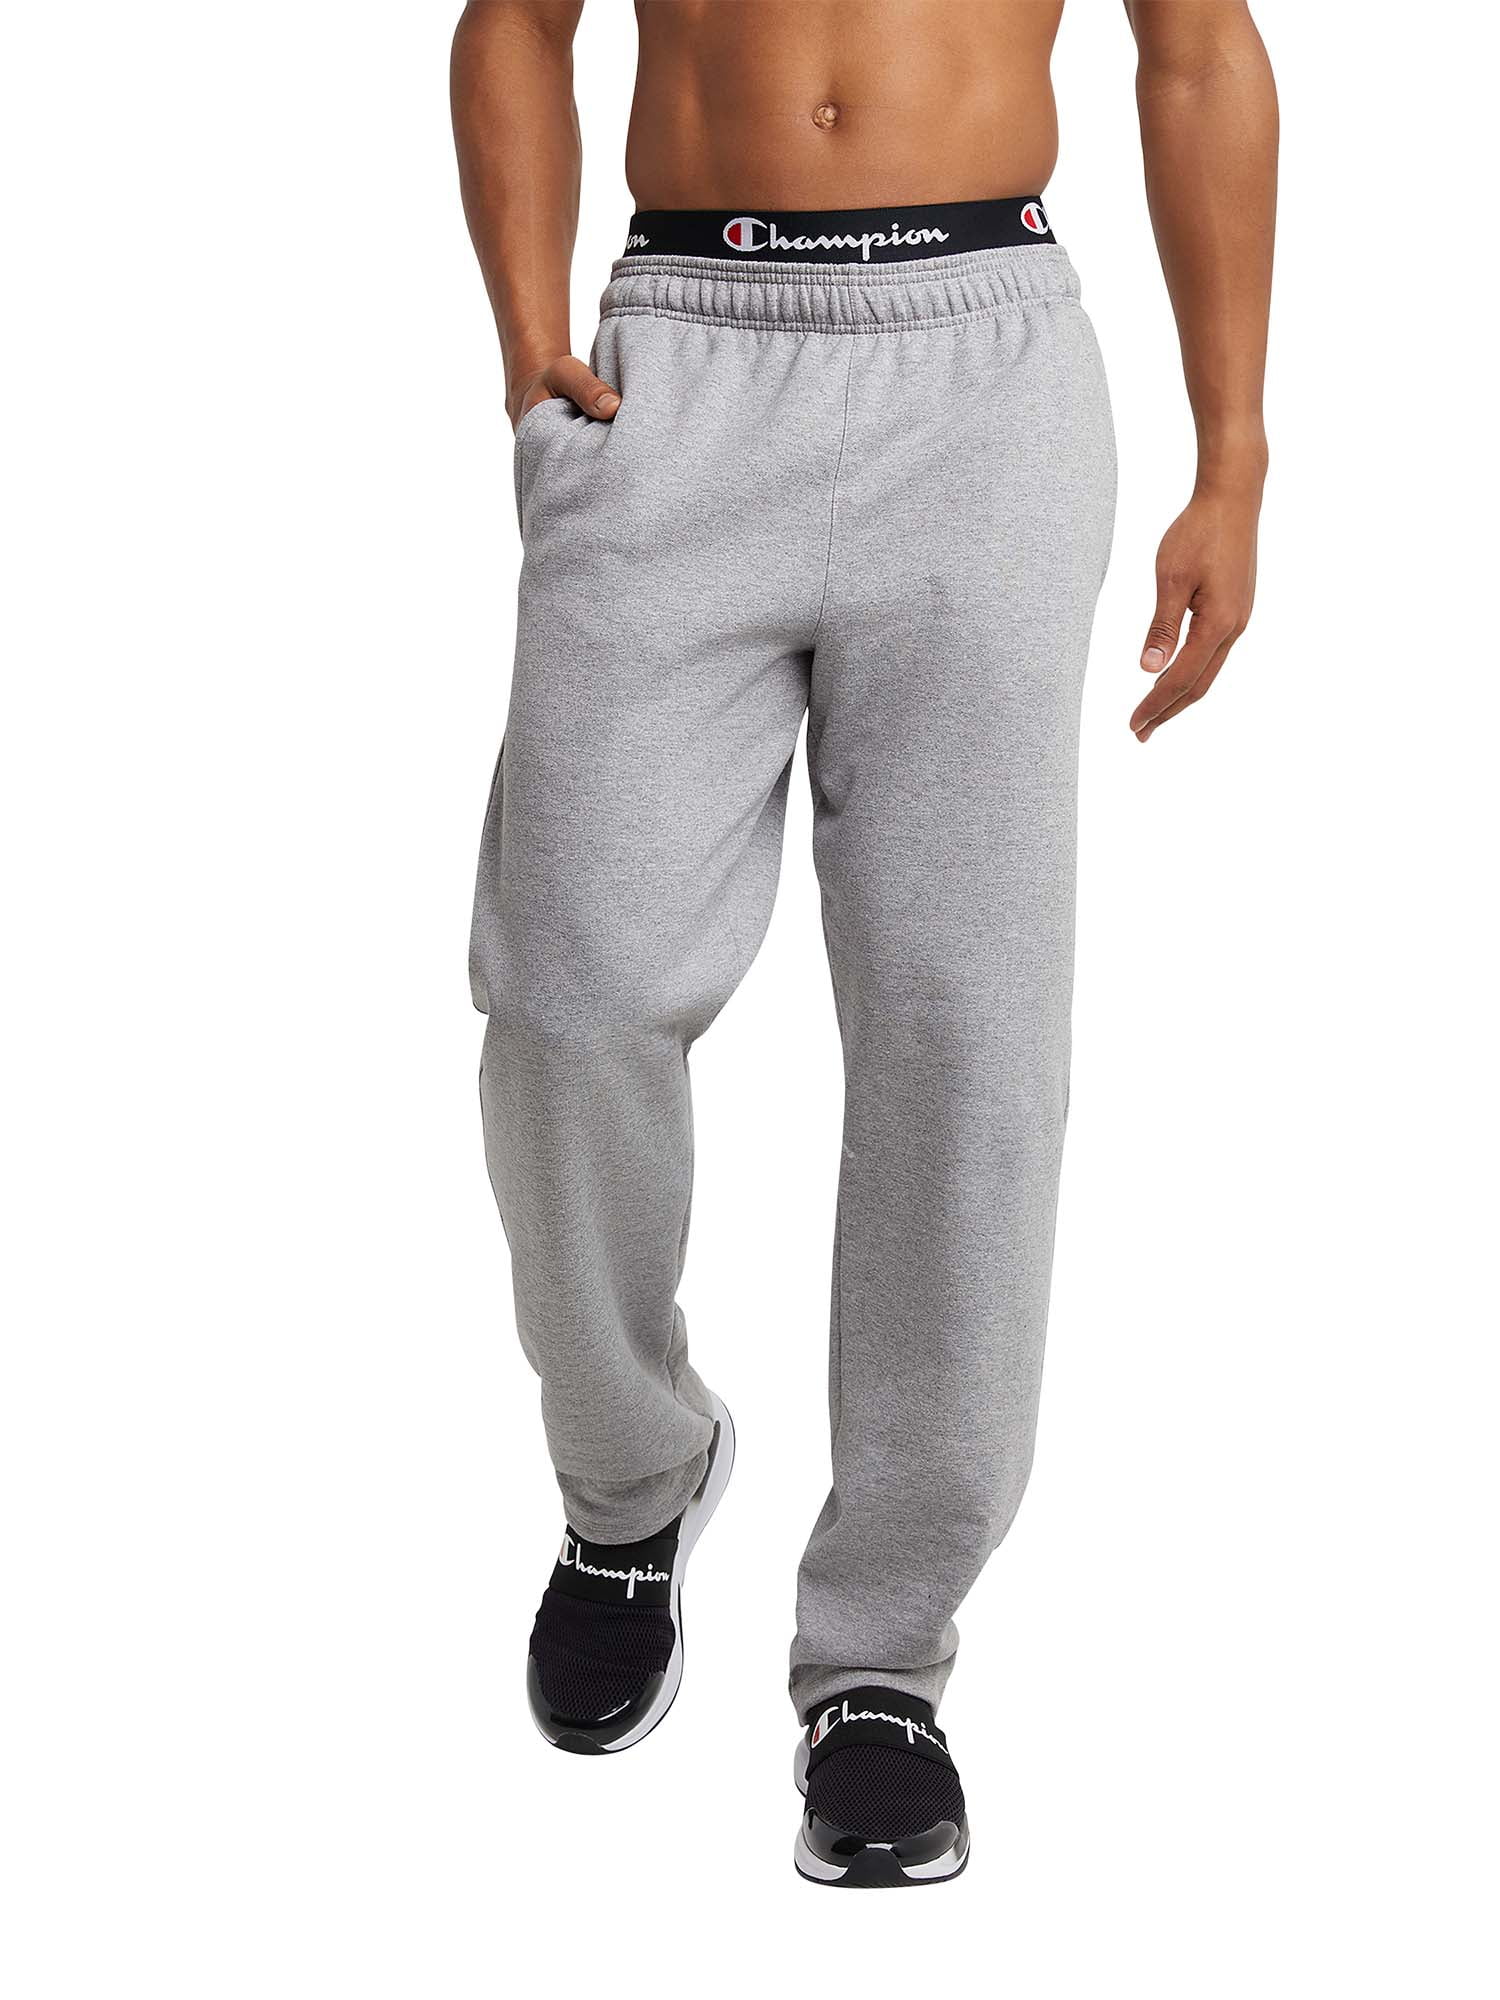 Men's Powerblend Fleece Open Bottom Sweatpants, 32